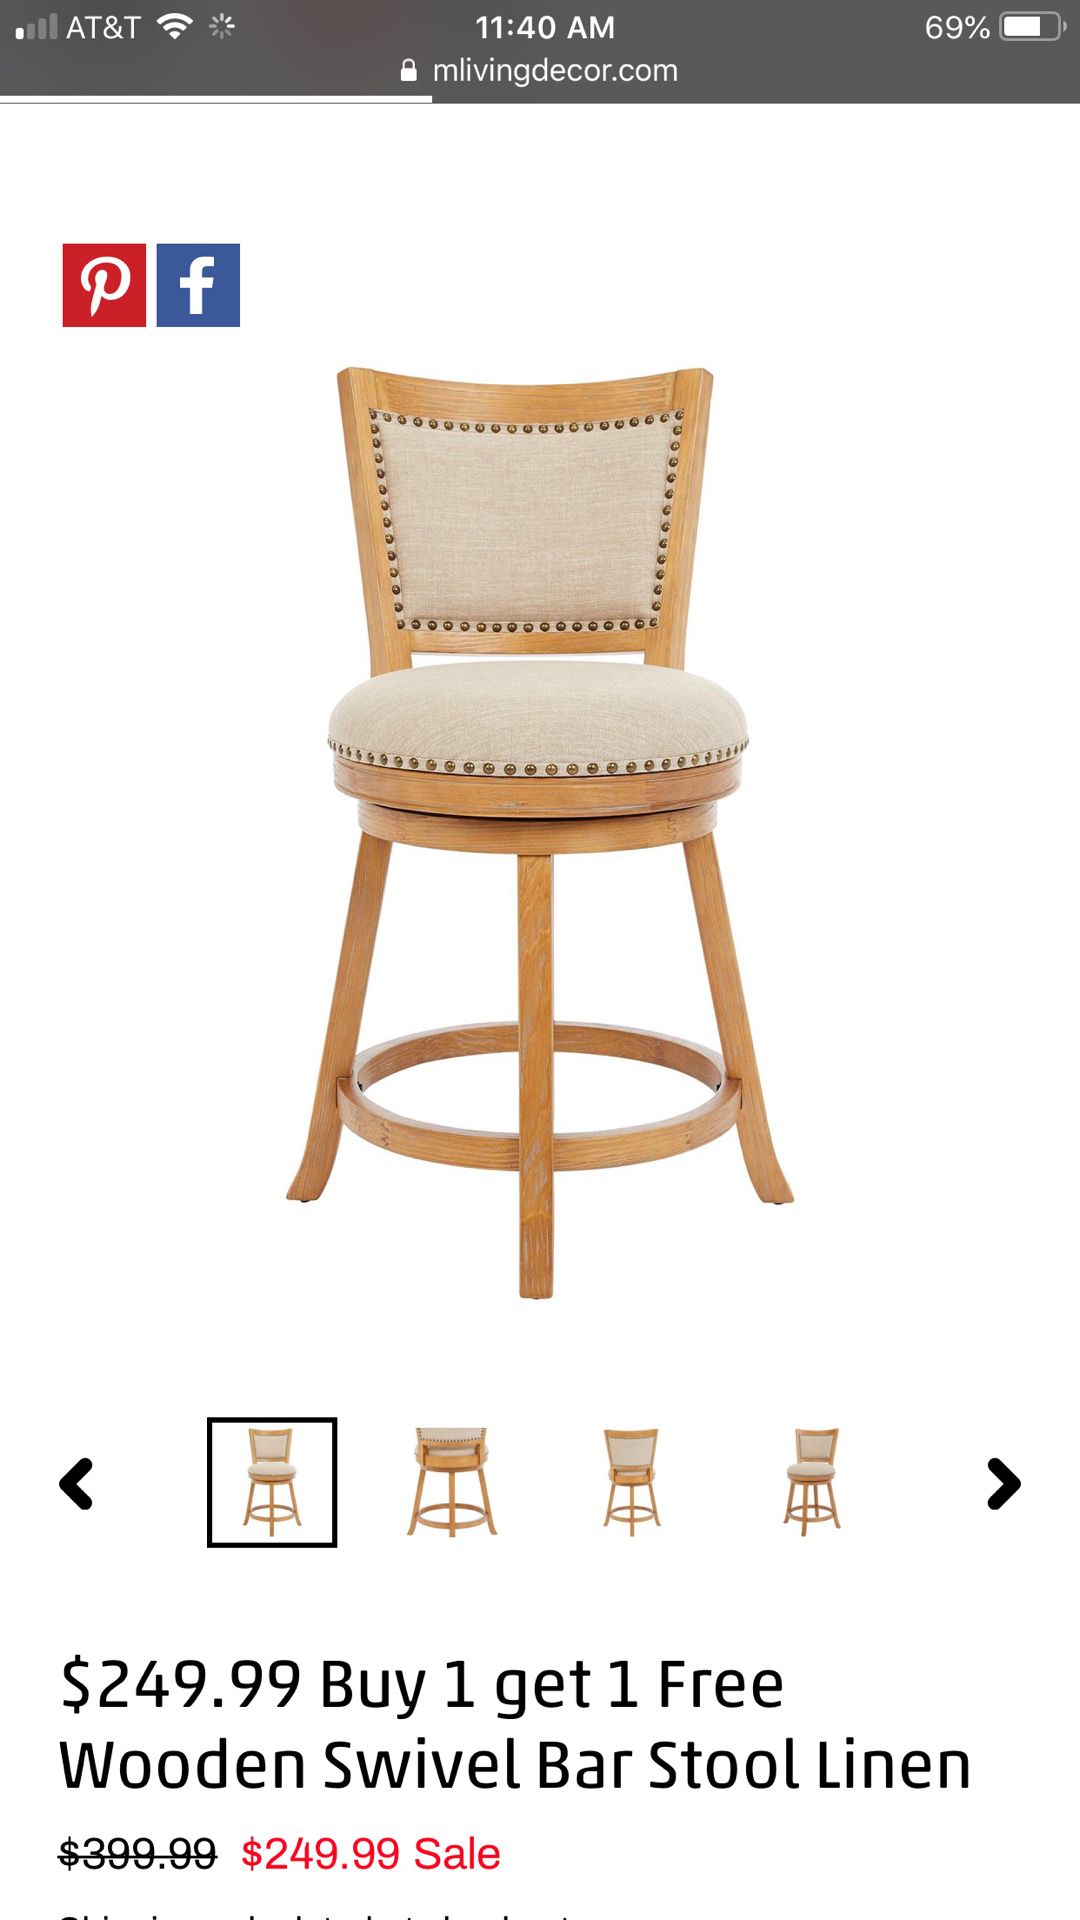 Wooden swivel bar stools $249 buy 1 get 1 free